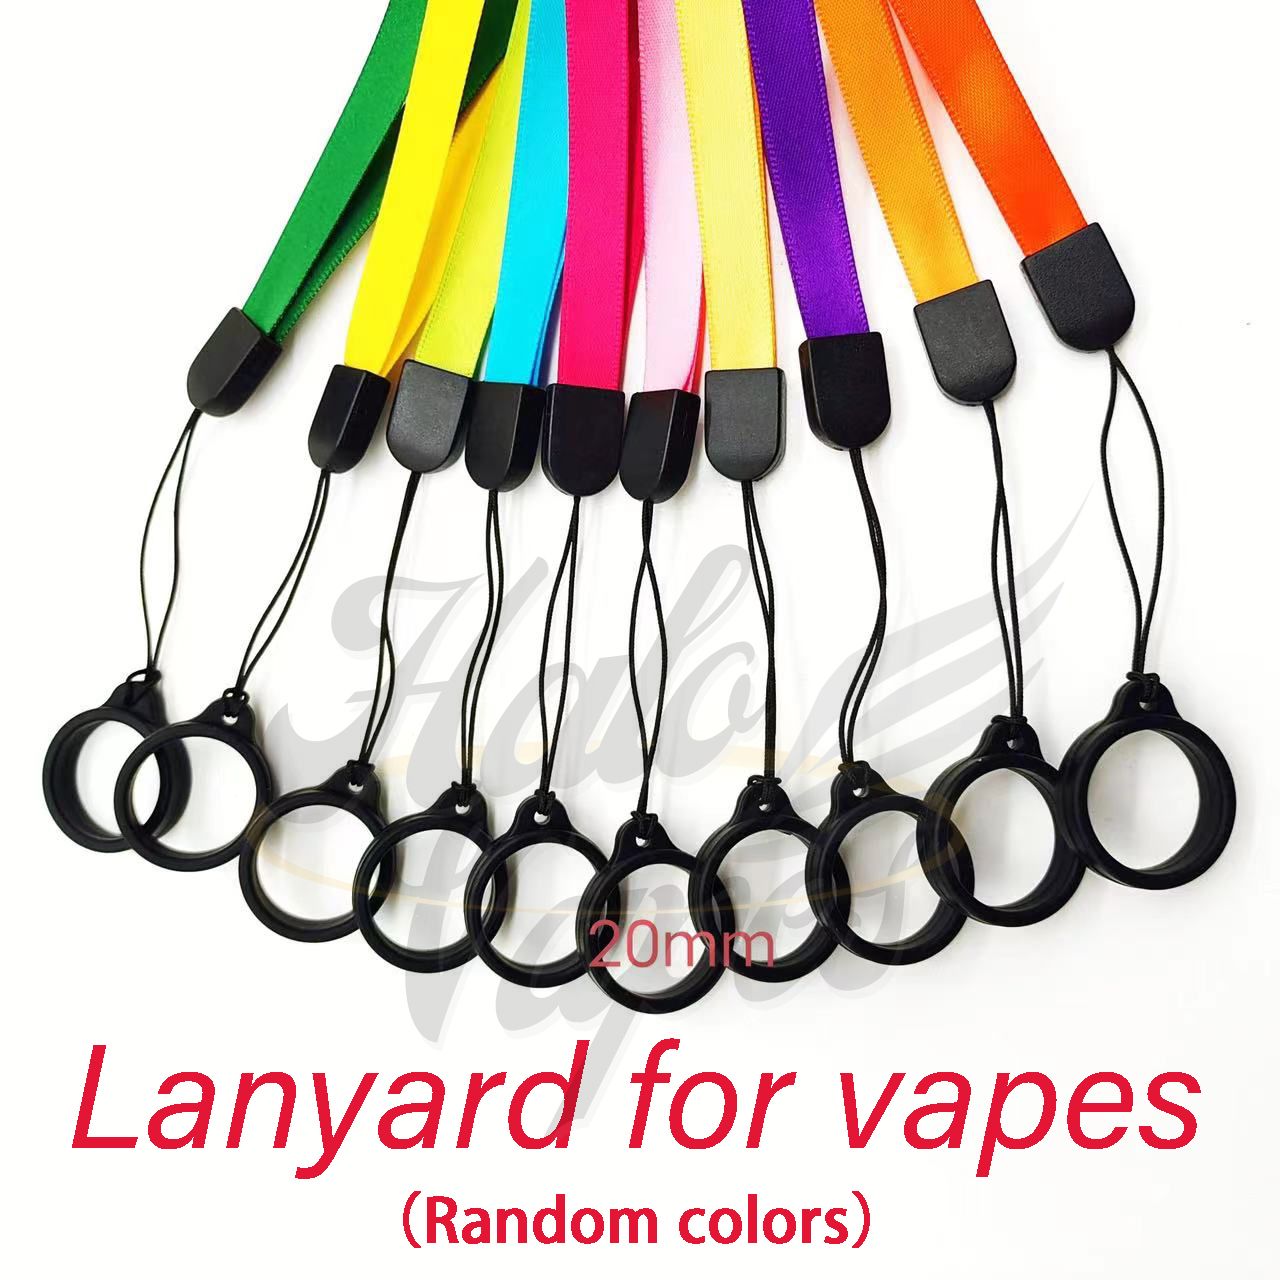 lanyards for vapes